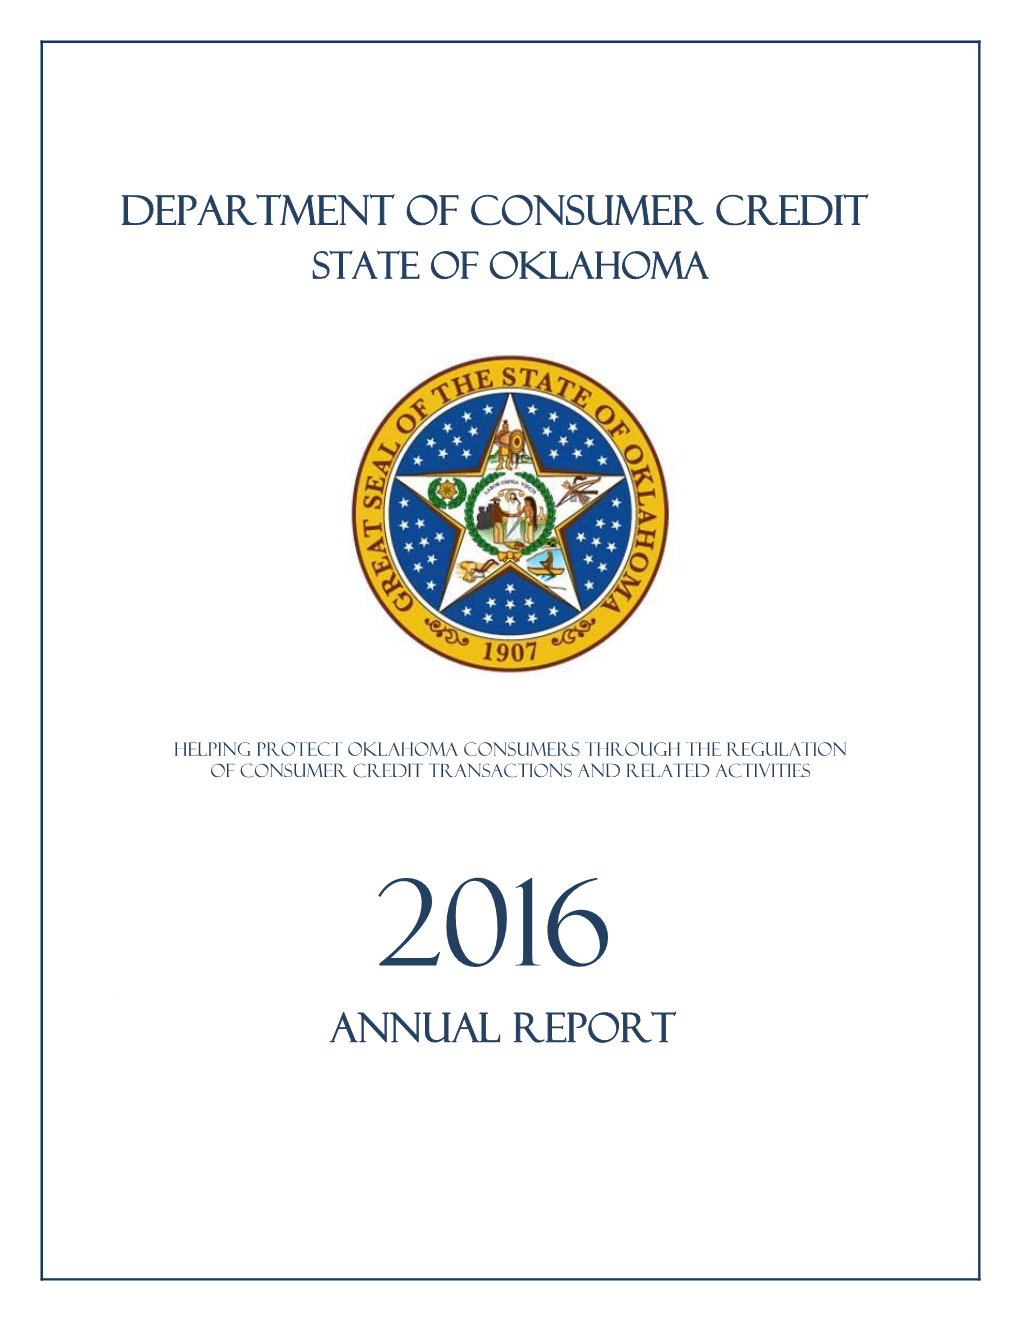 Department of Consumer Credit Annual Report